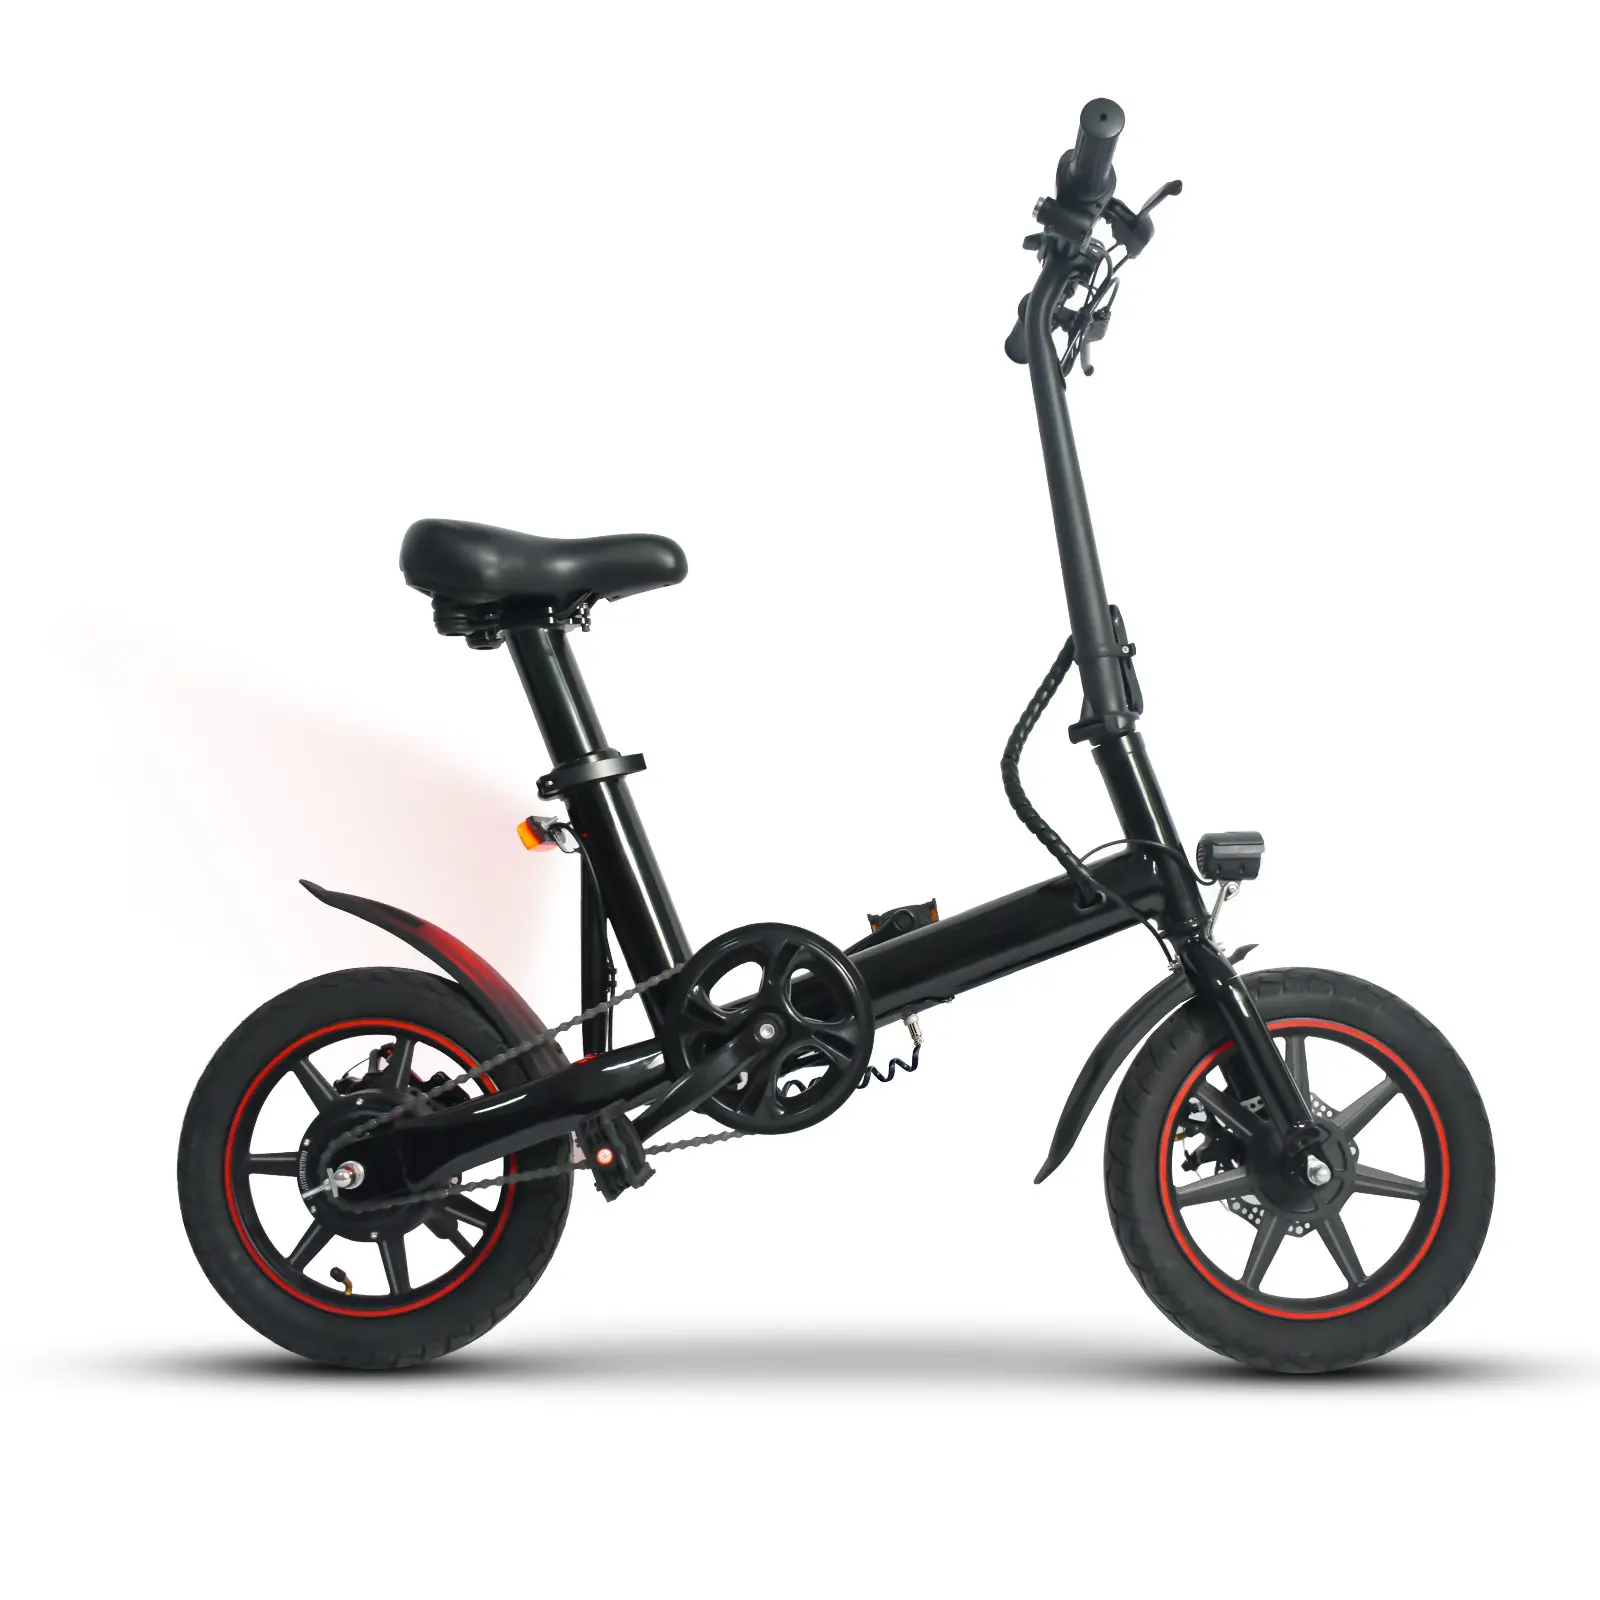 Складной электрический велосипед со склада в ЕС по цене DDP, 14 дюймовая шина, 350 Ватт, батарея 6 Ач